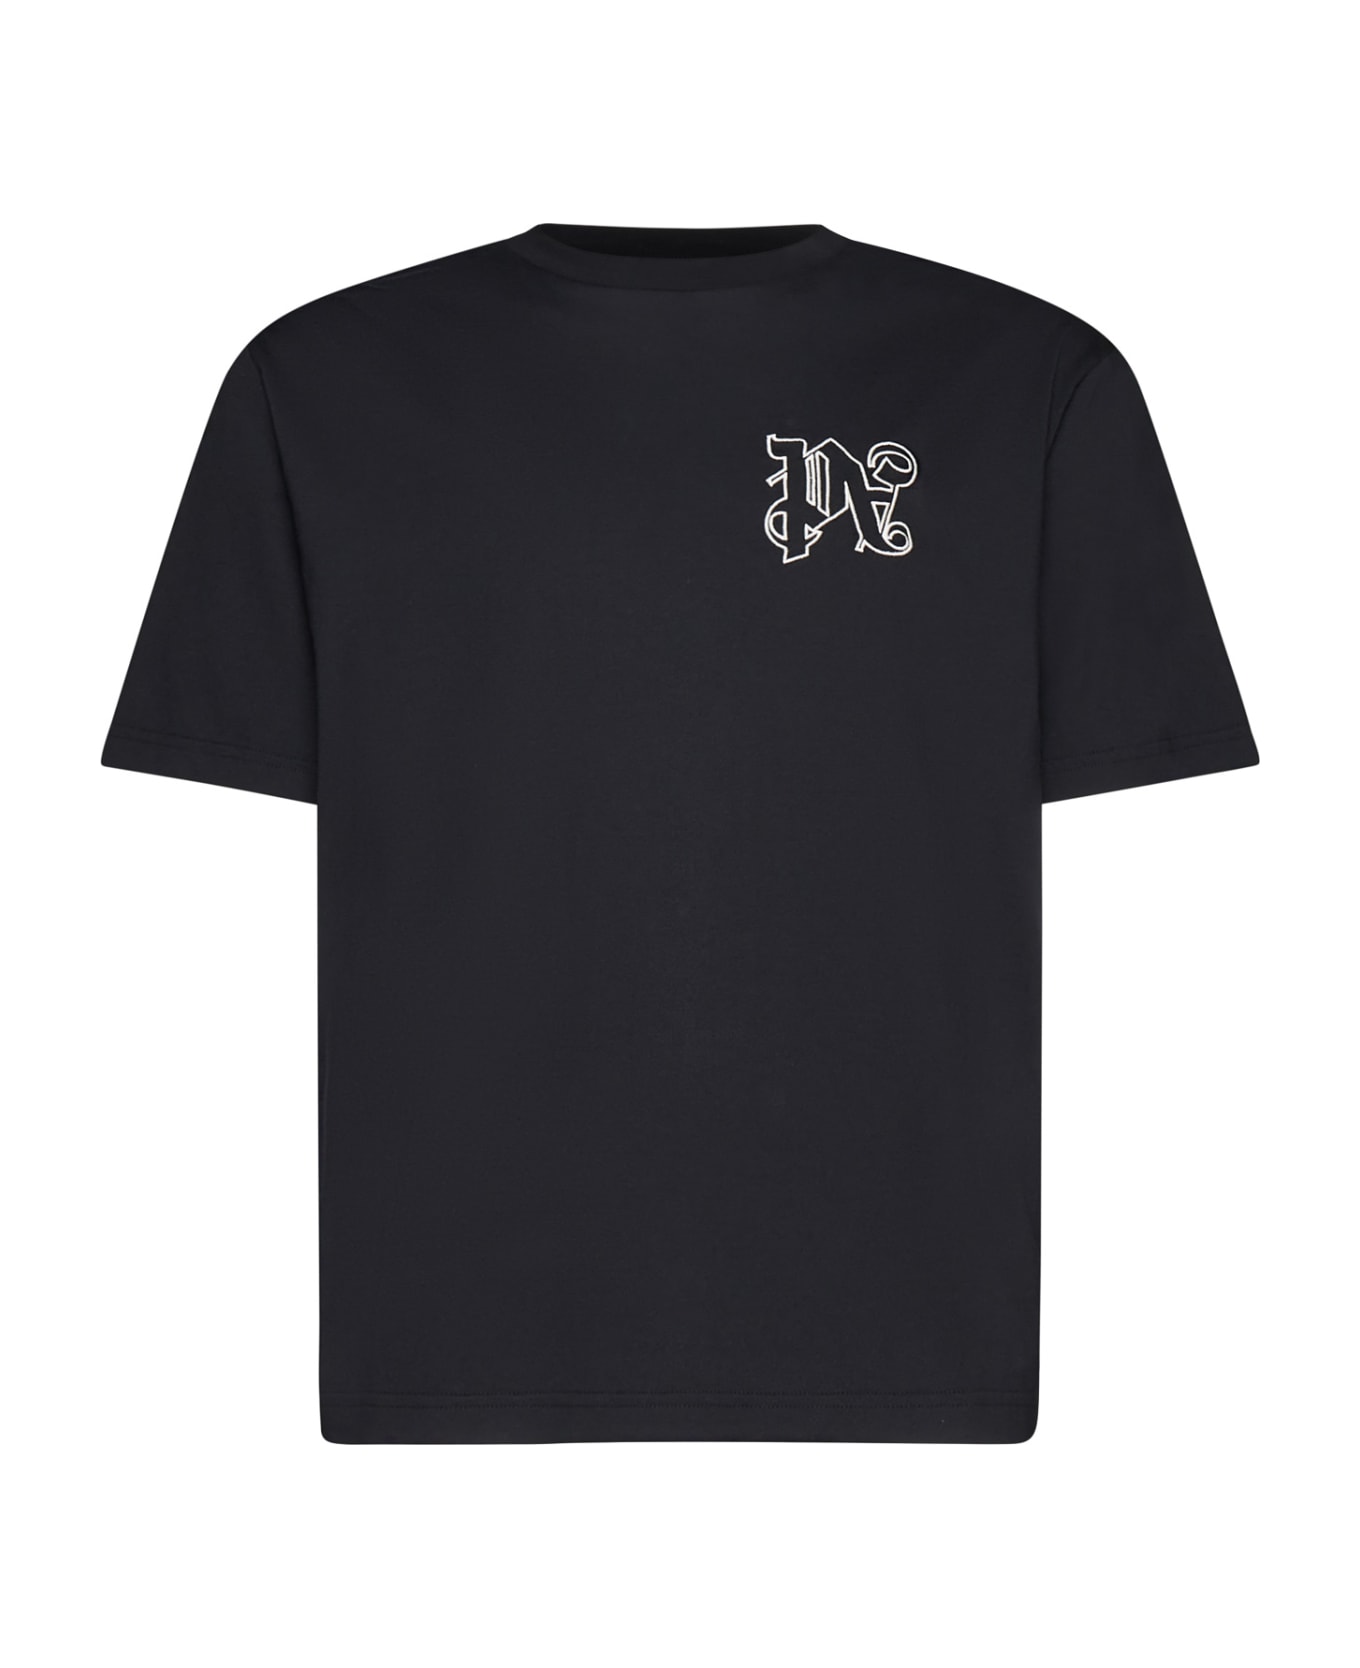 Palm Angels Black T-shirt With Monogram - Black シャツ